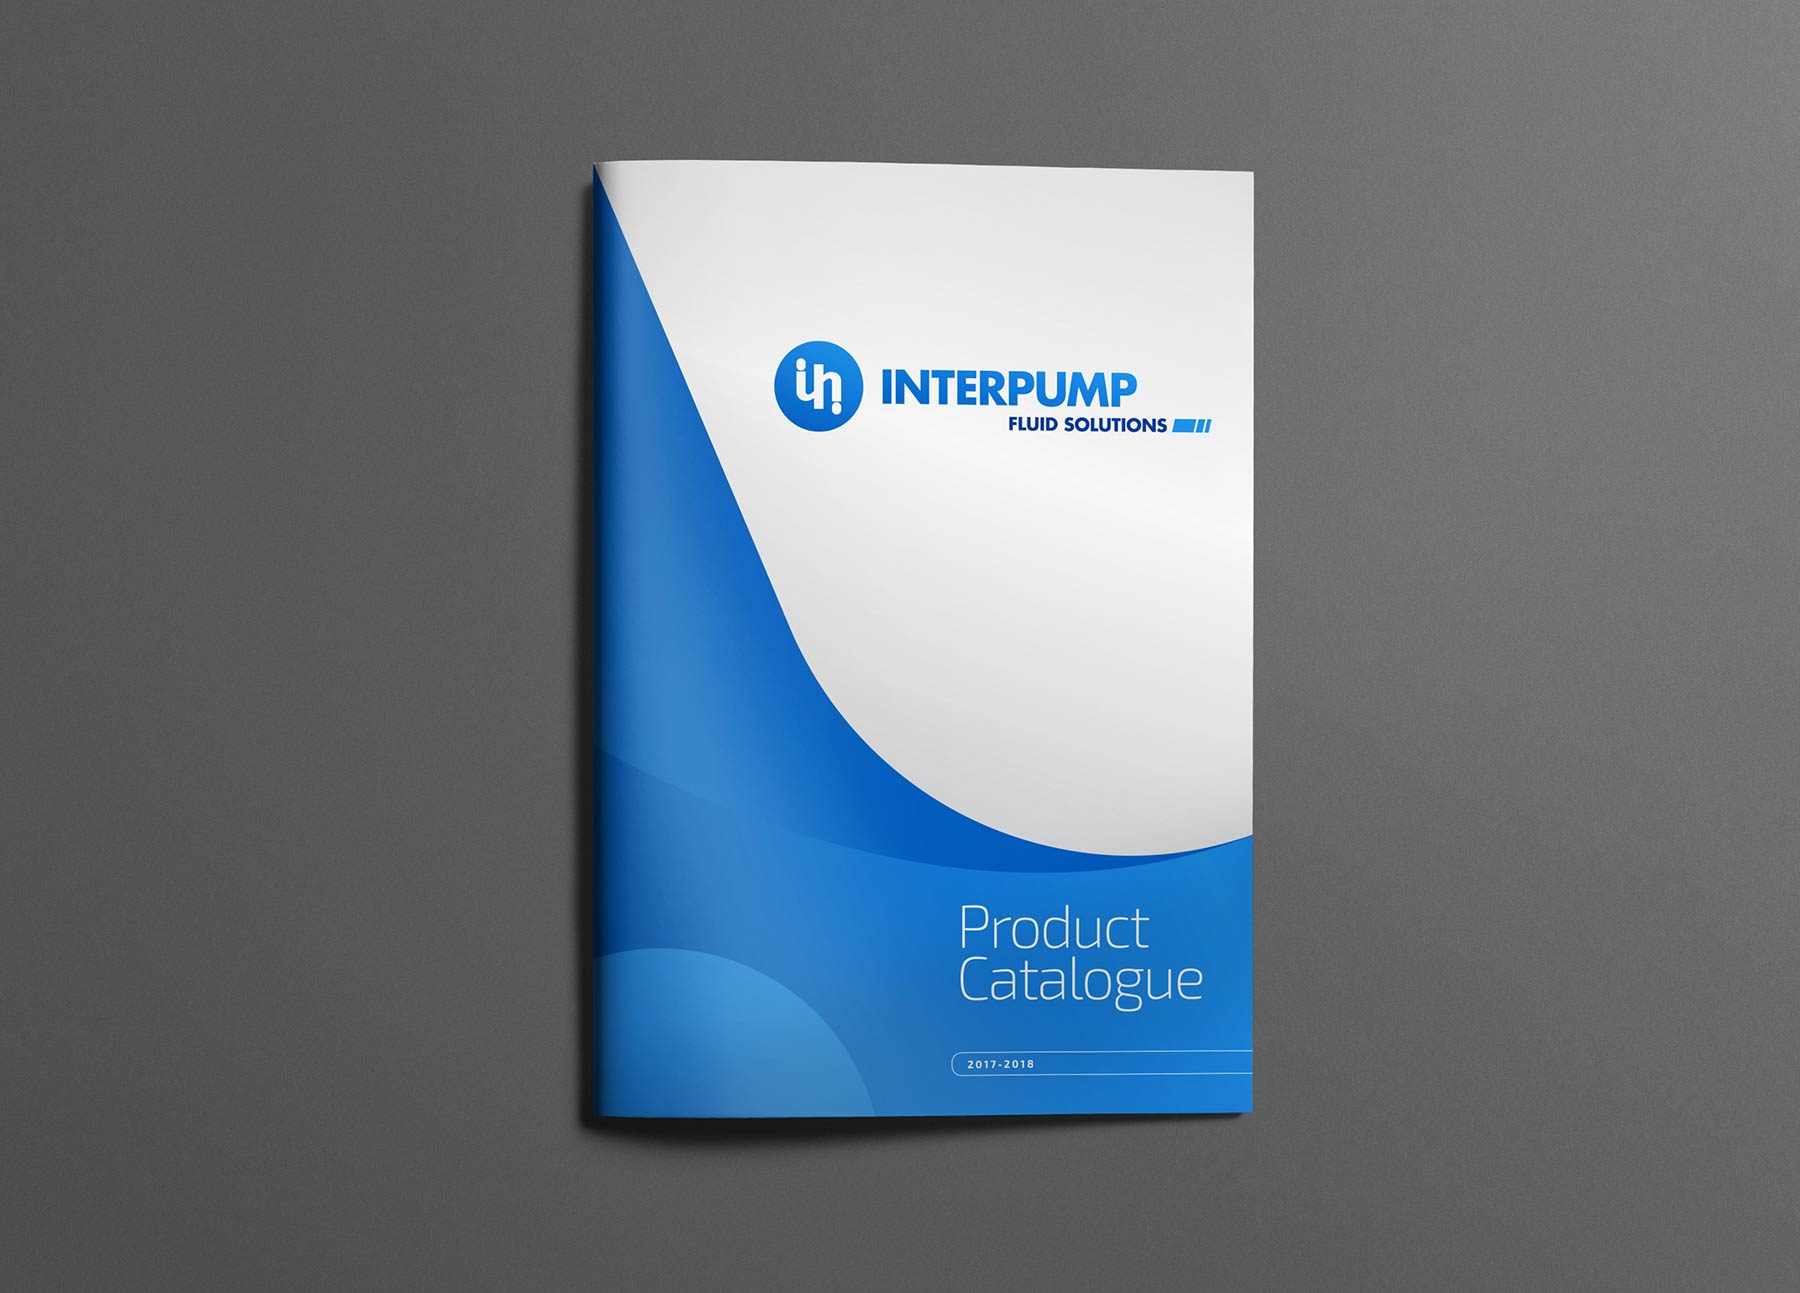 led-by-design-interpump-portfolio2